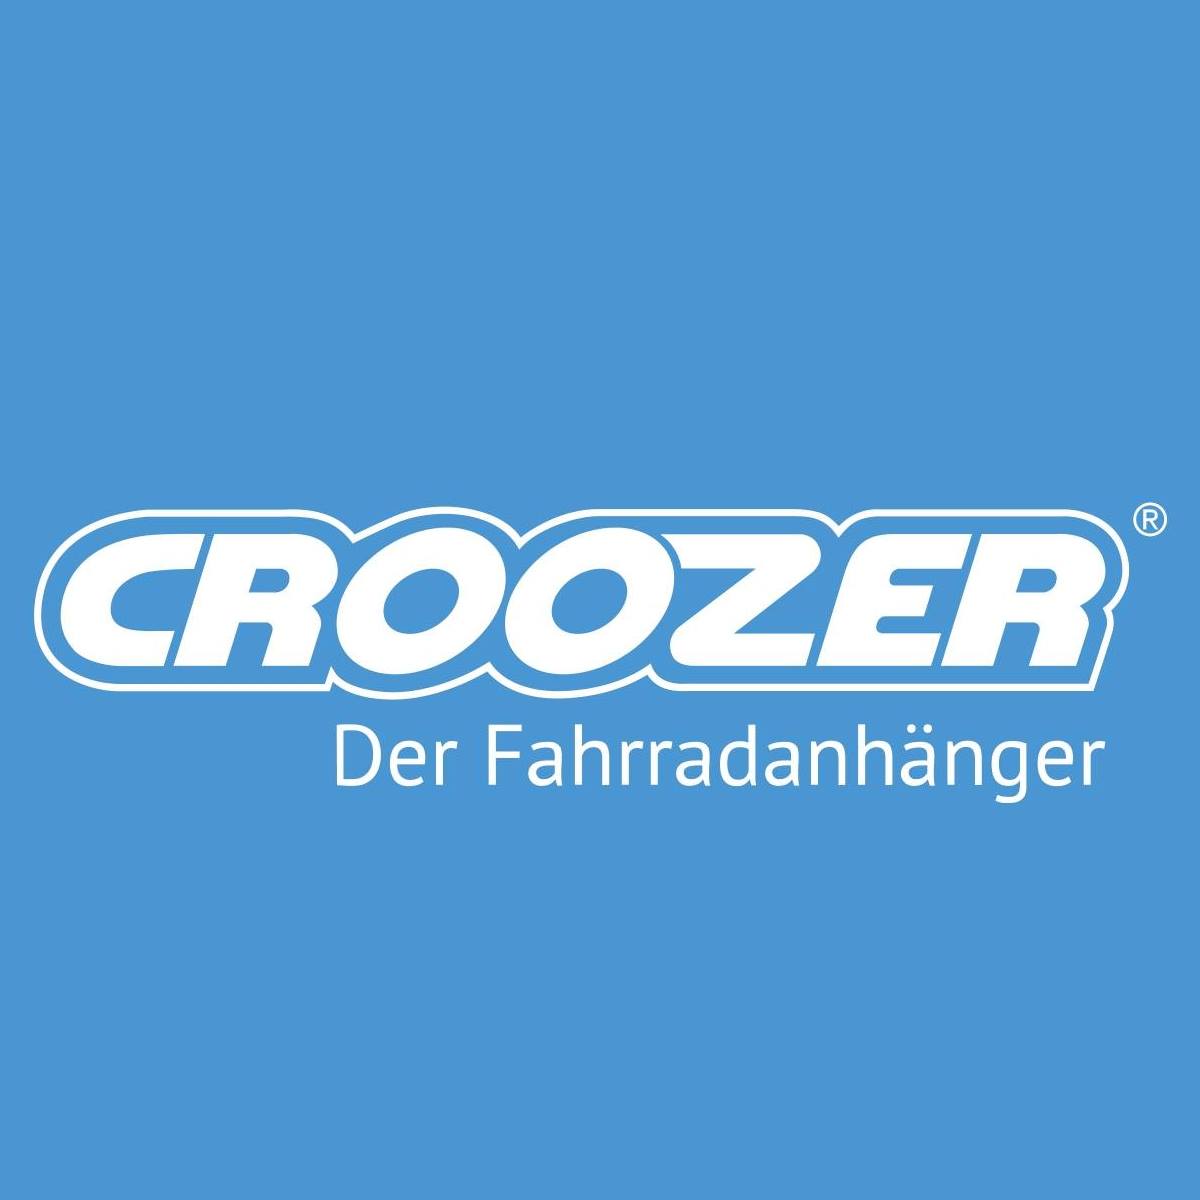 Croozer GmbH